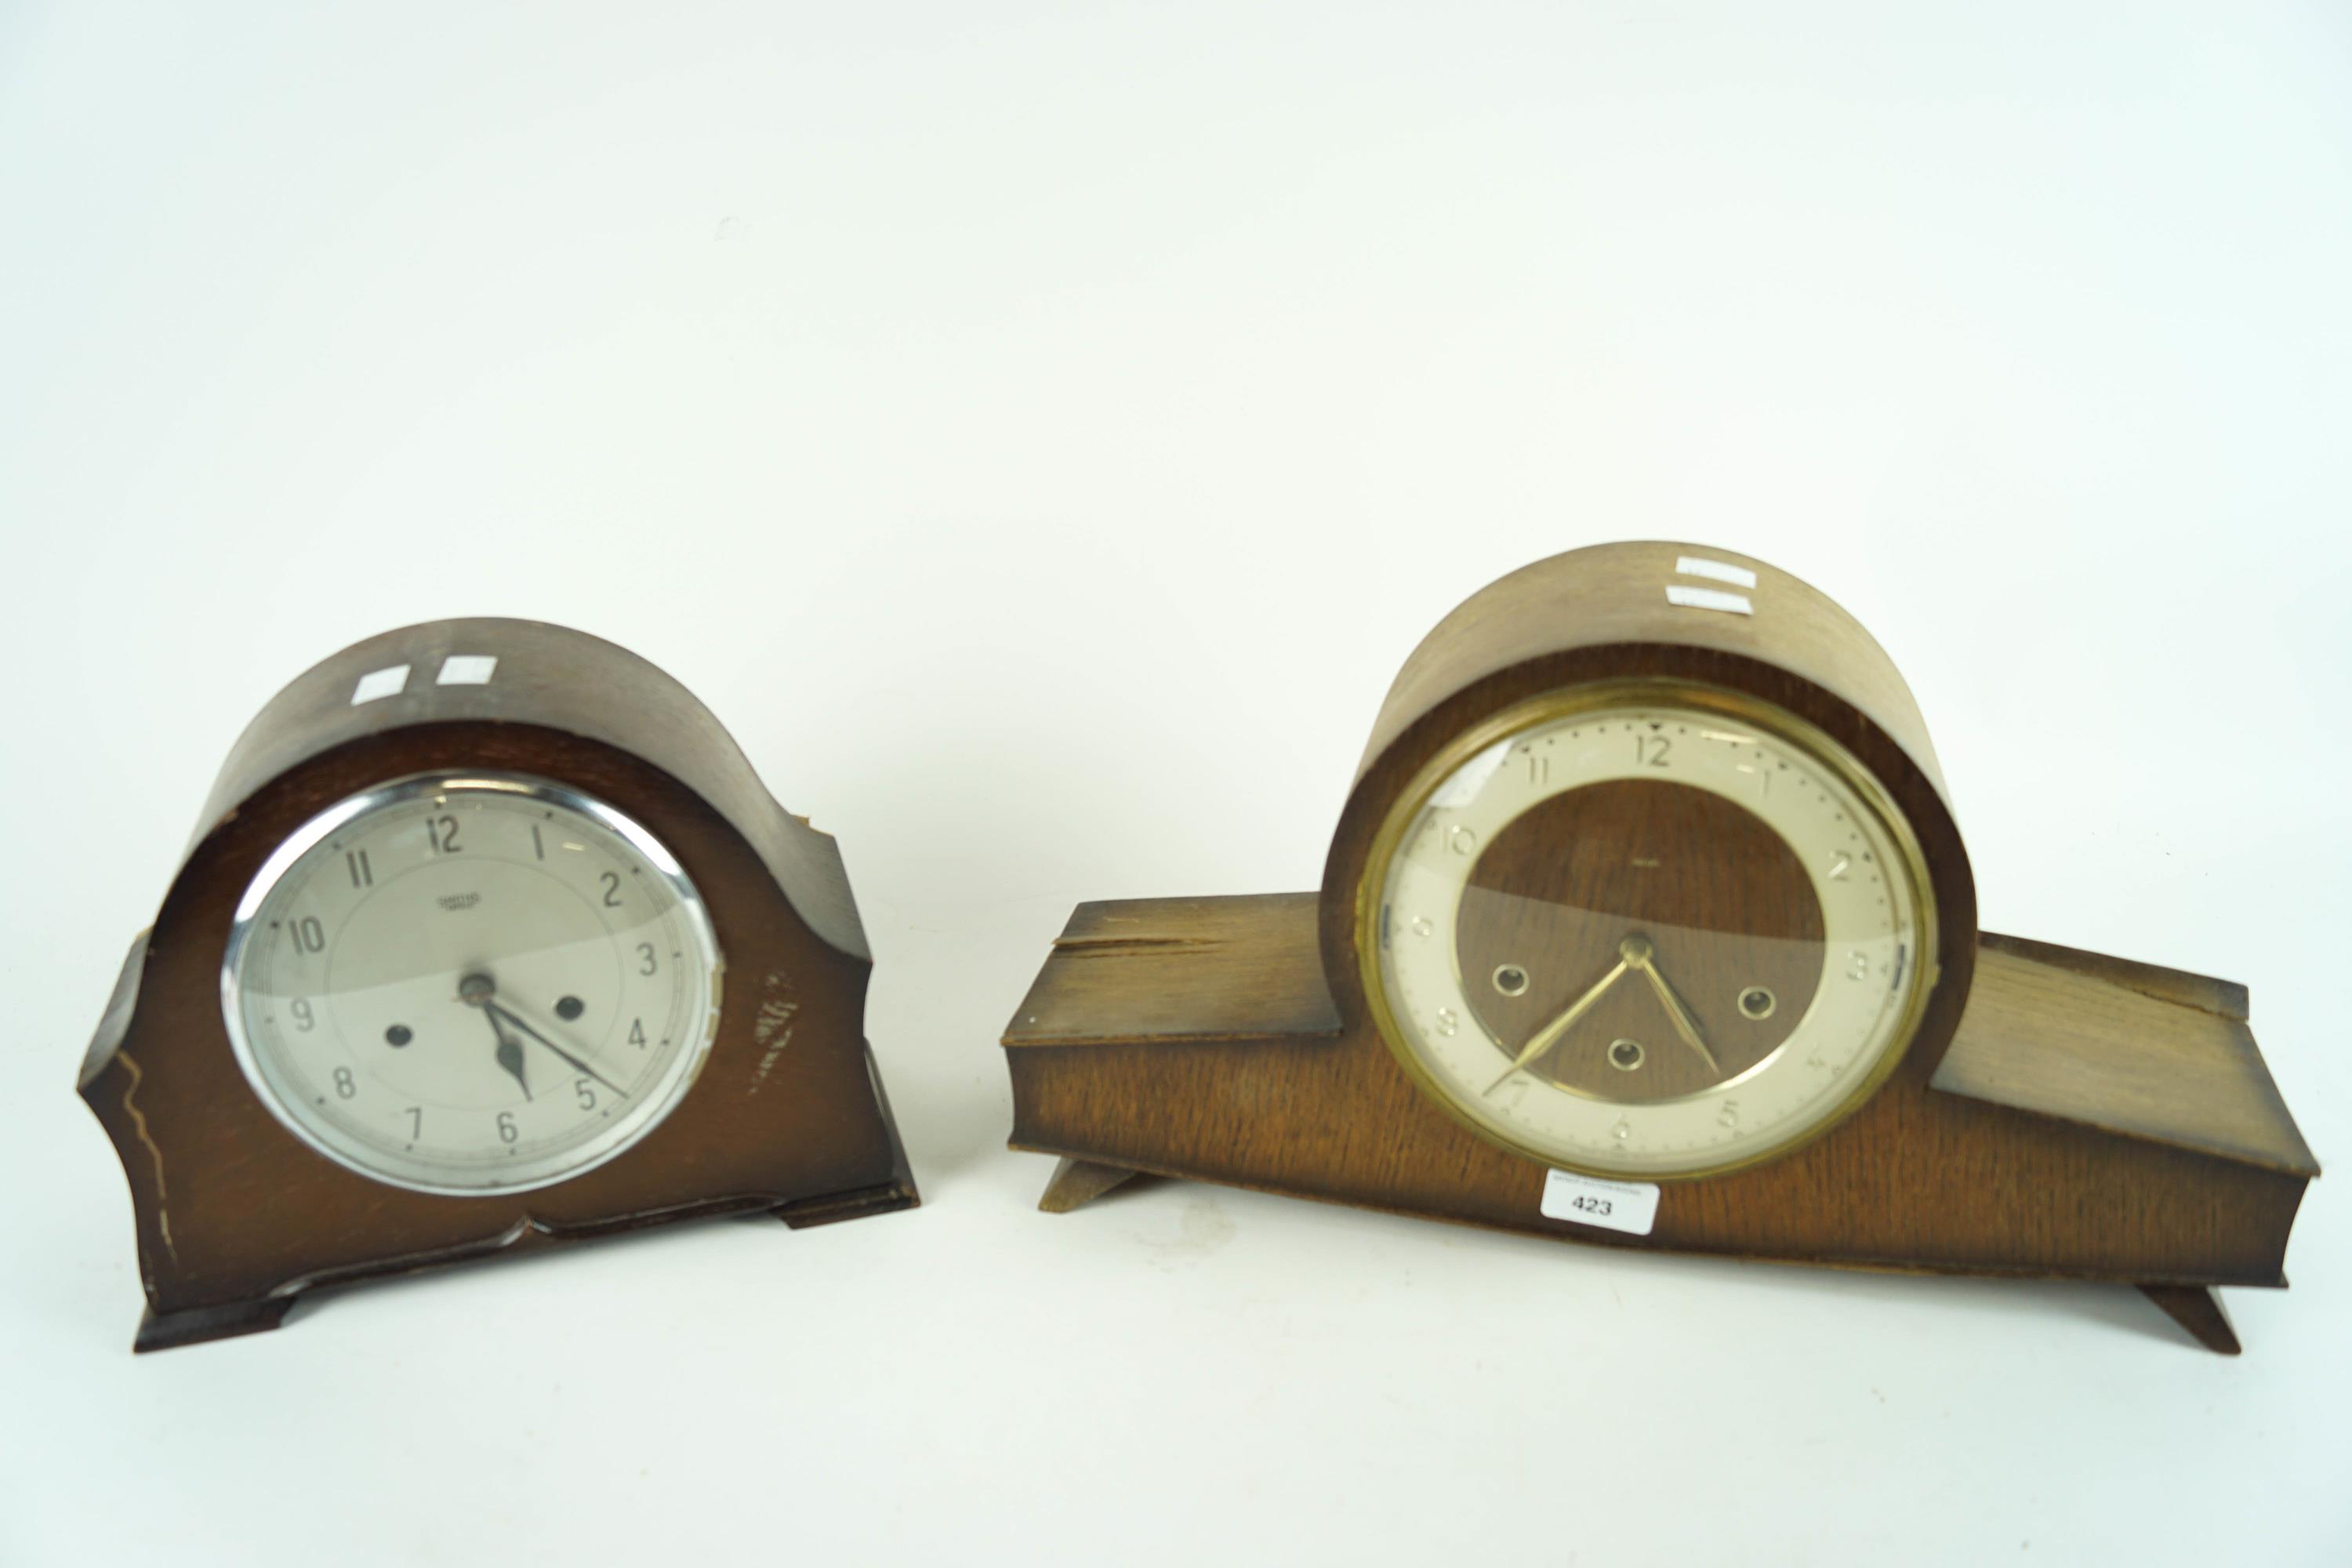 Two clocks